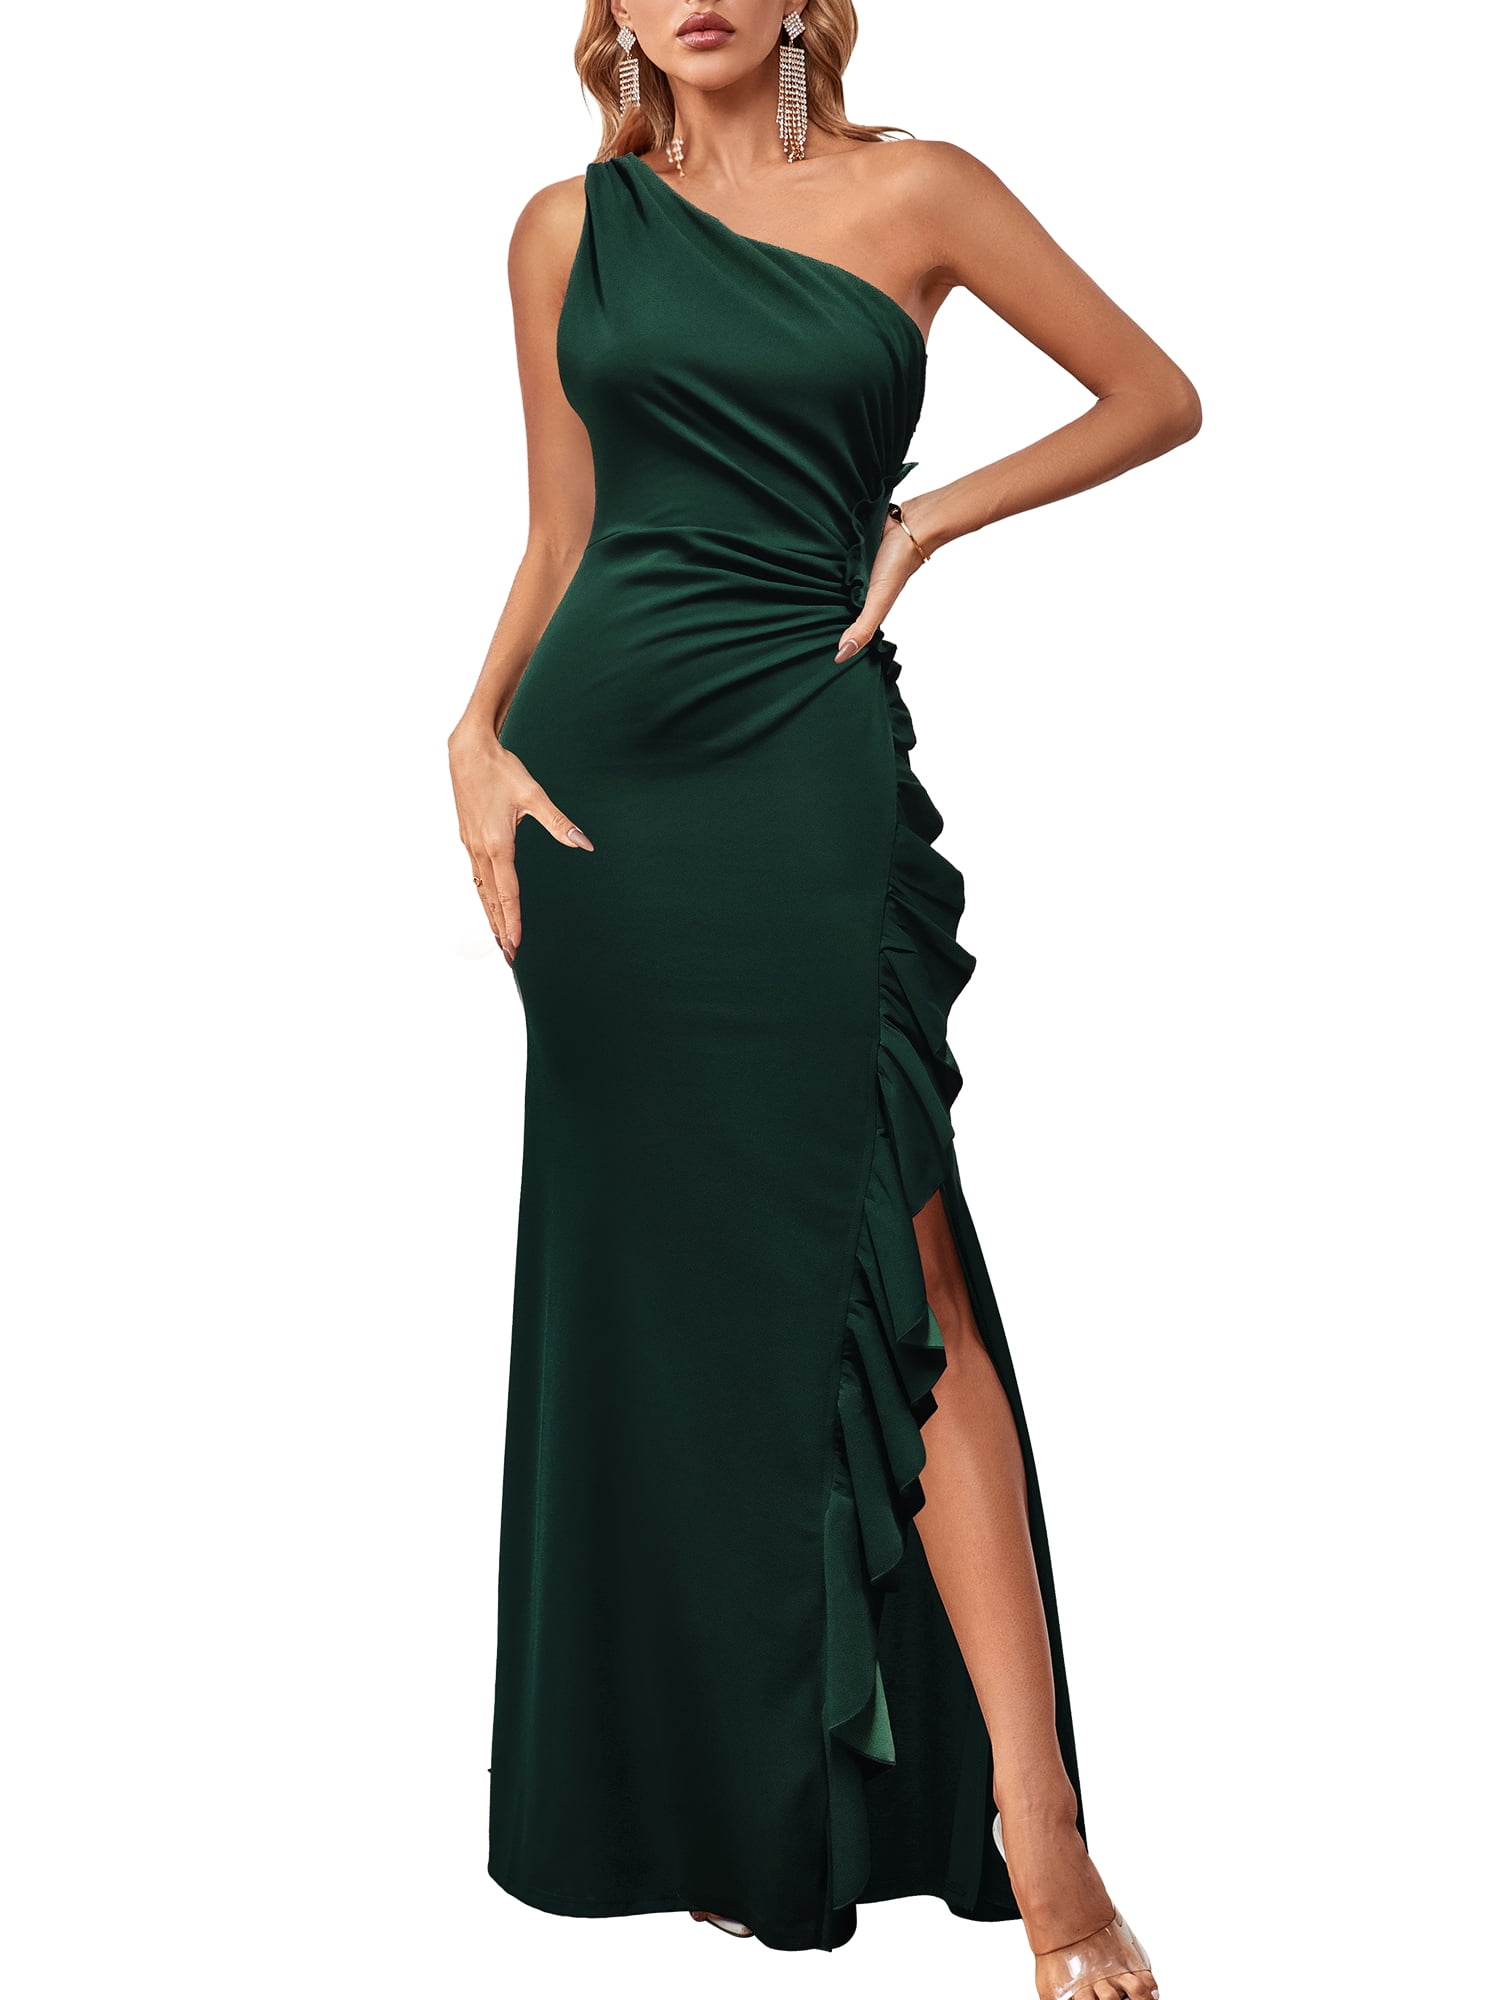 SouqFone Women's Sleeveless High Slit Flounces Trim Formal Dress-M,Dark ...